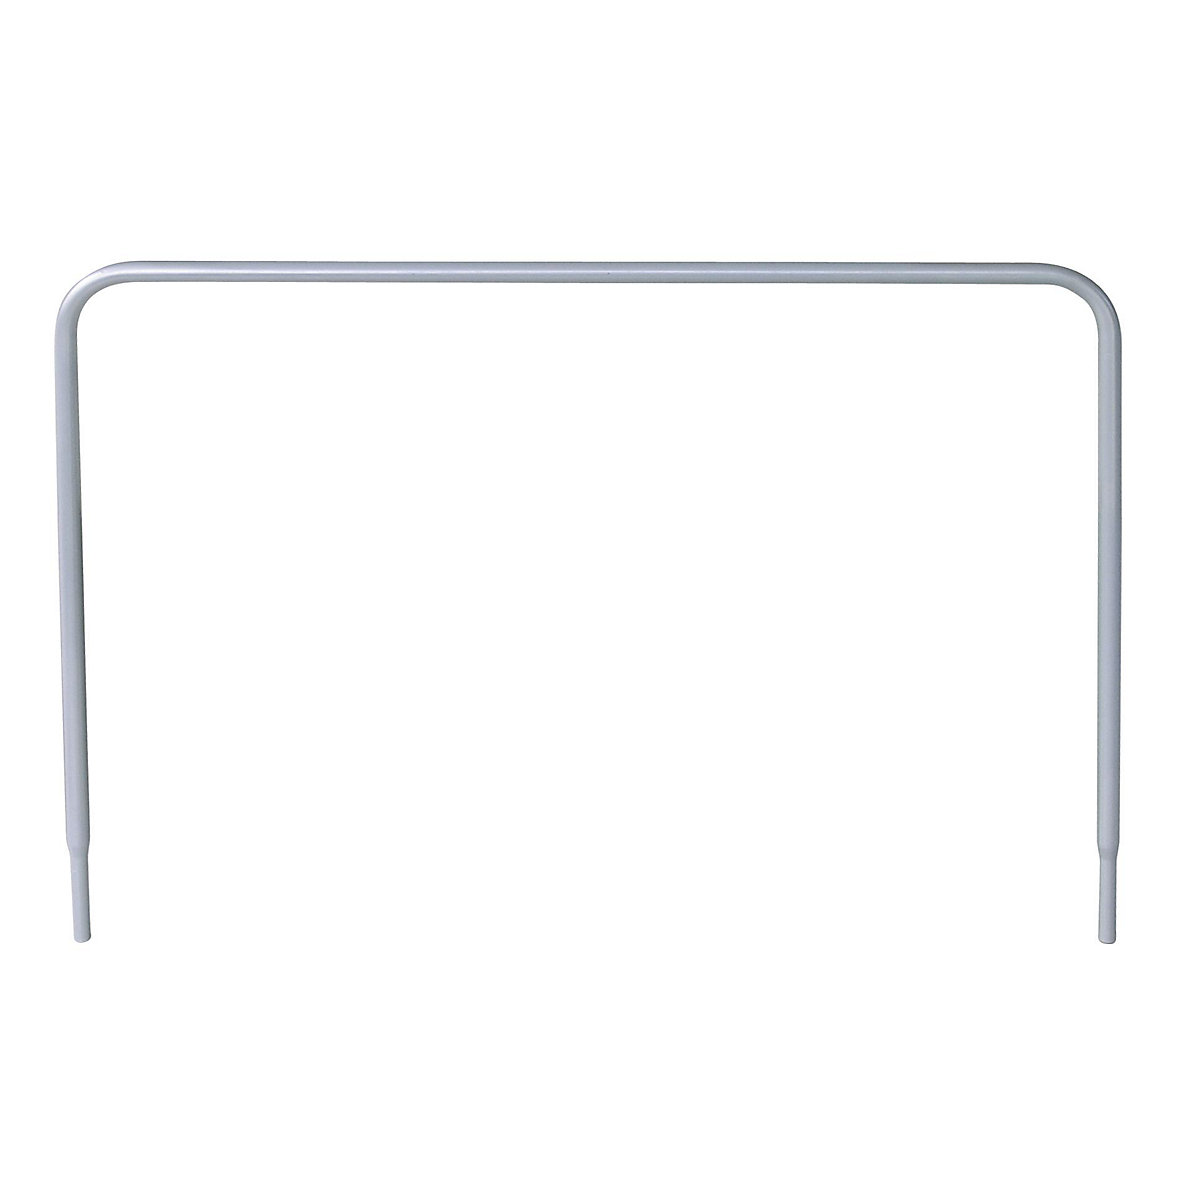 Shelf divider for C-rails – SCHULTE, length 600 mm, height 500 mm-1